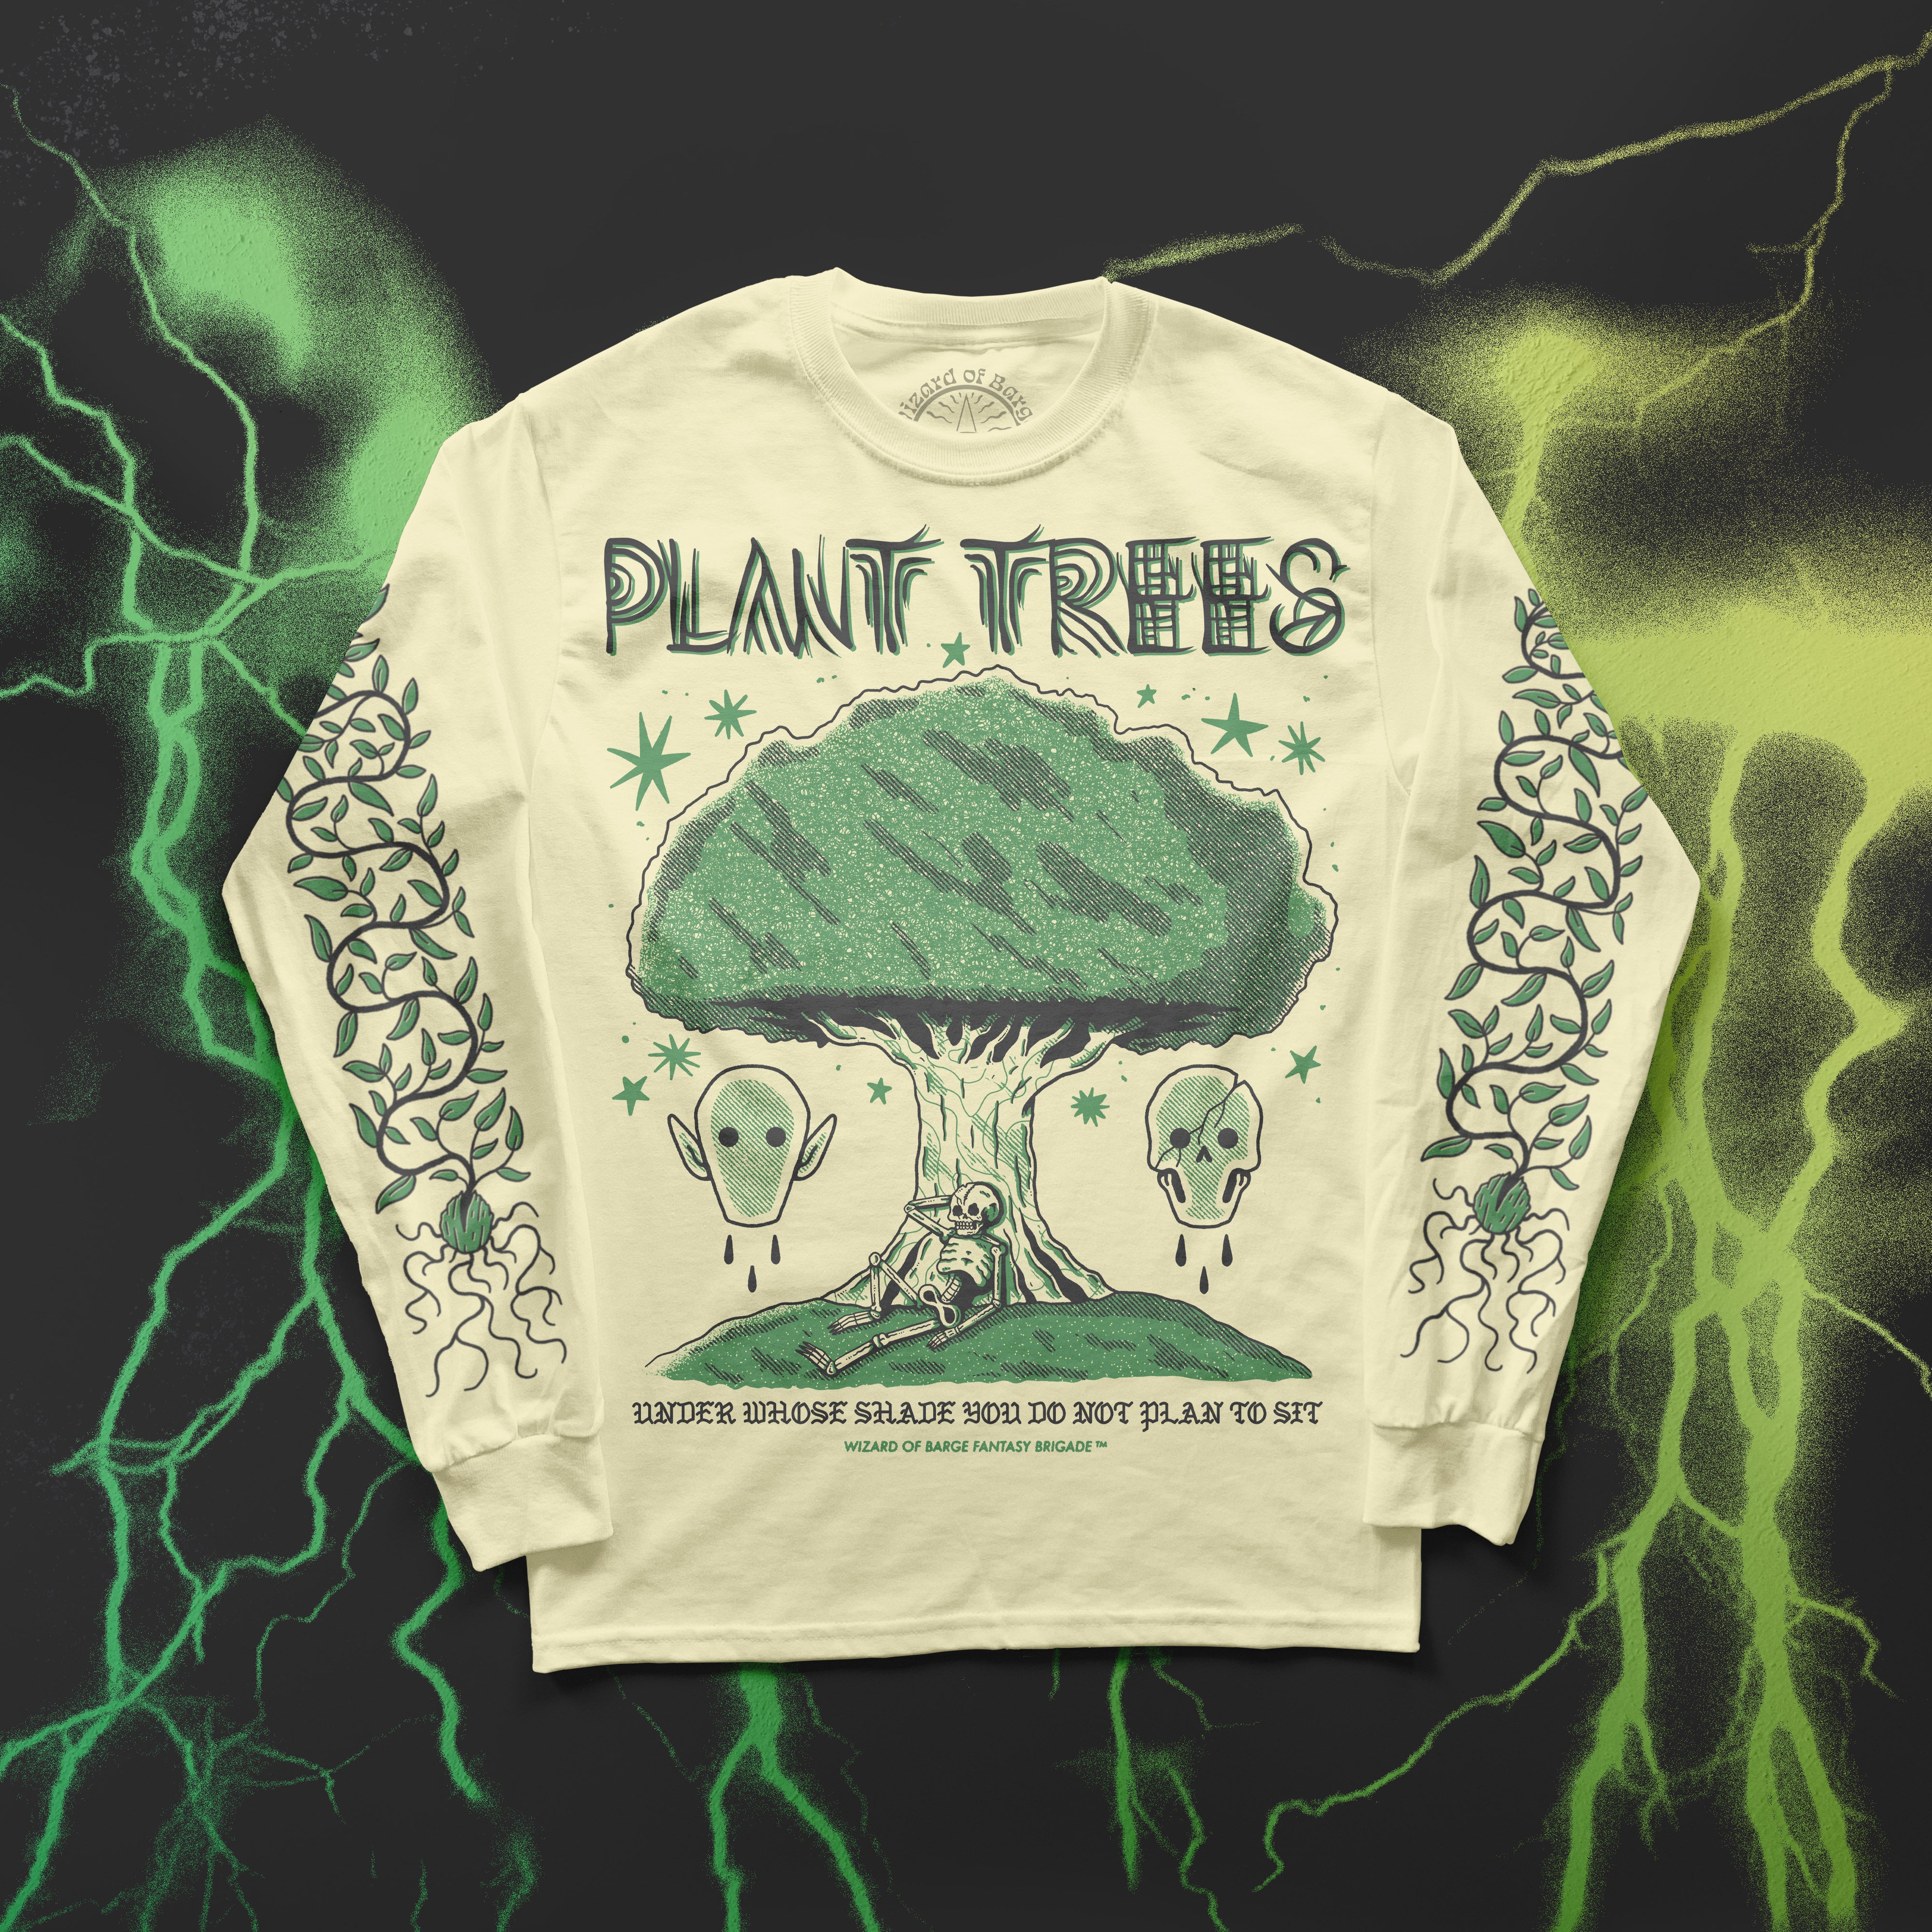 Tree Wizard Lyrics | Essential T-Shirt